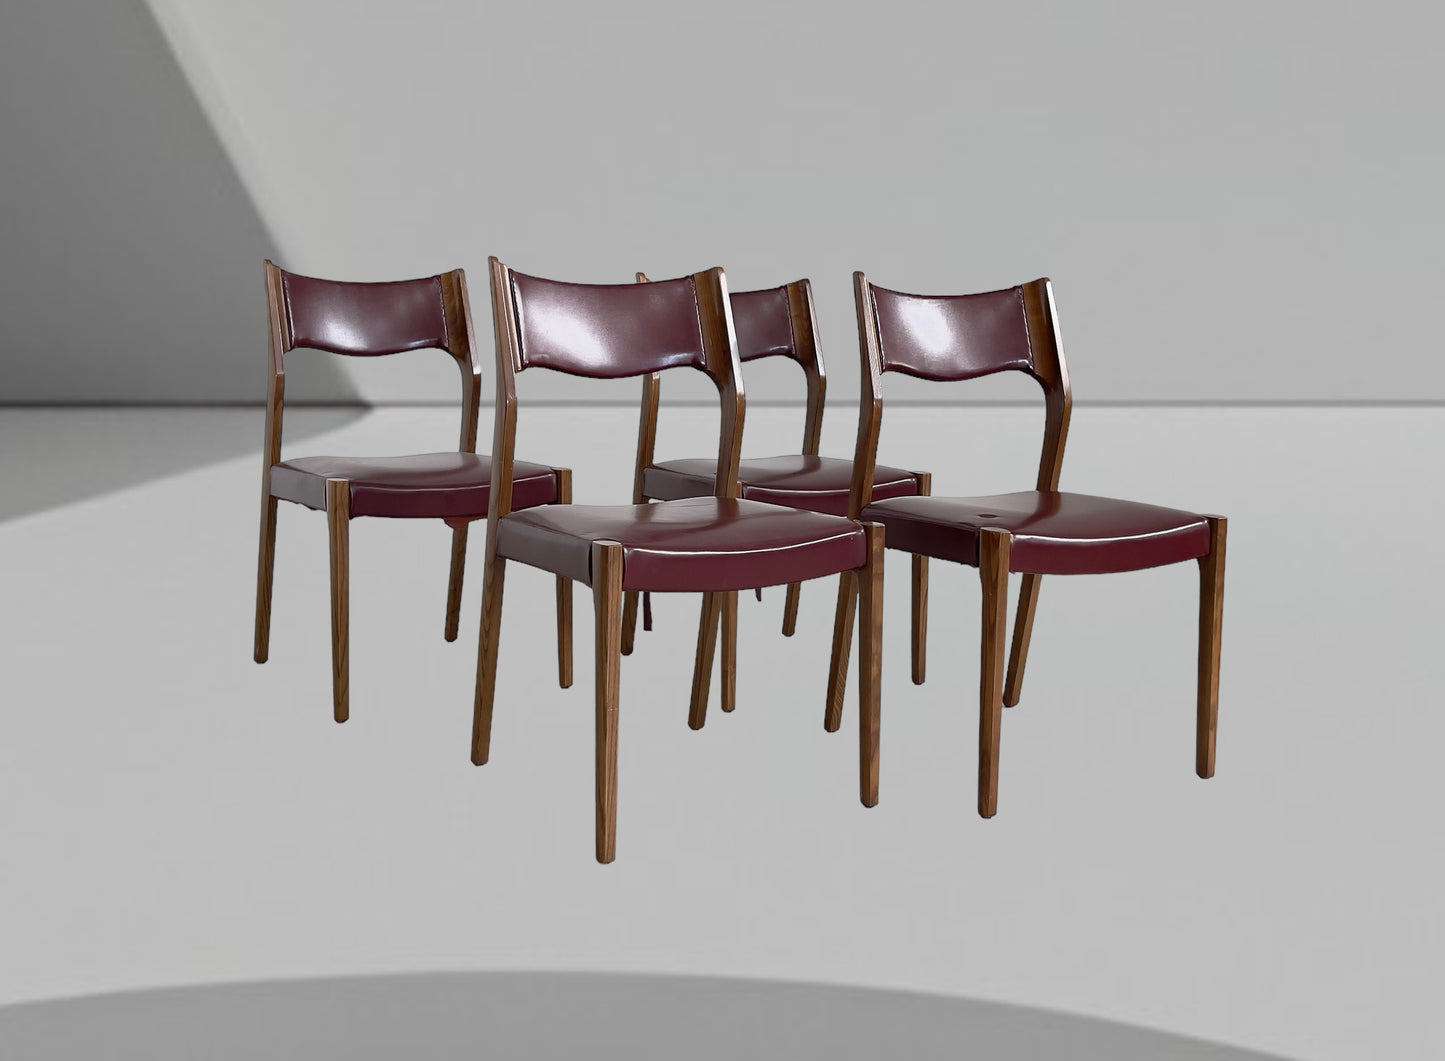 Four Italian chairs, 1950s